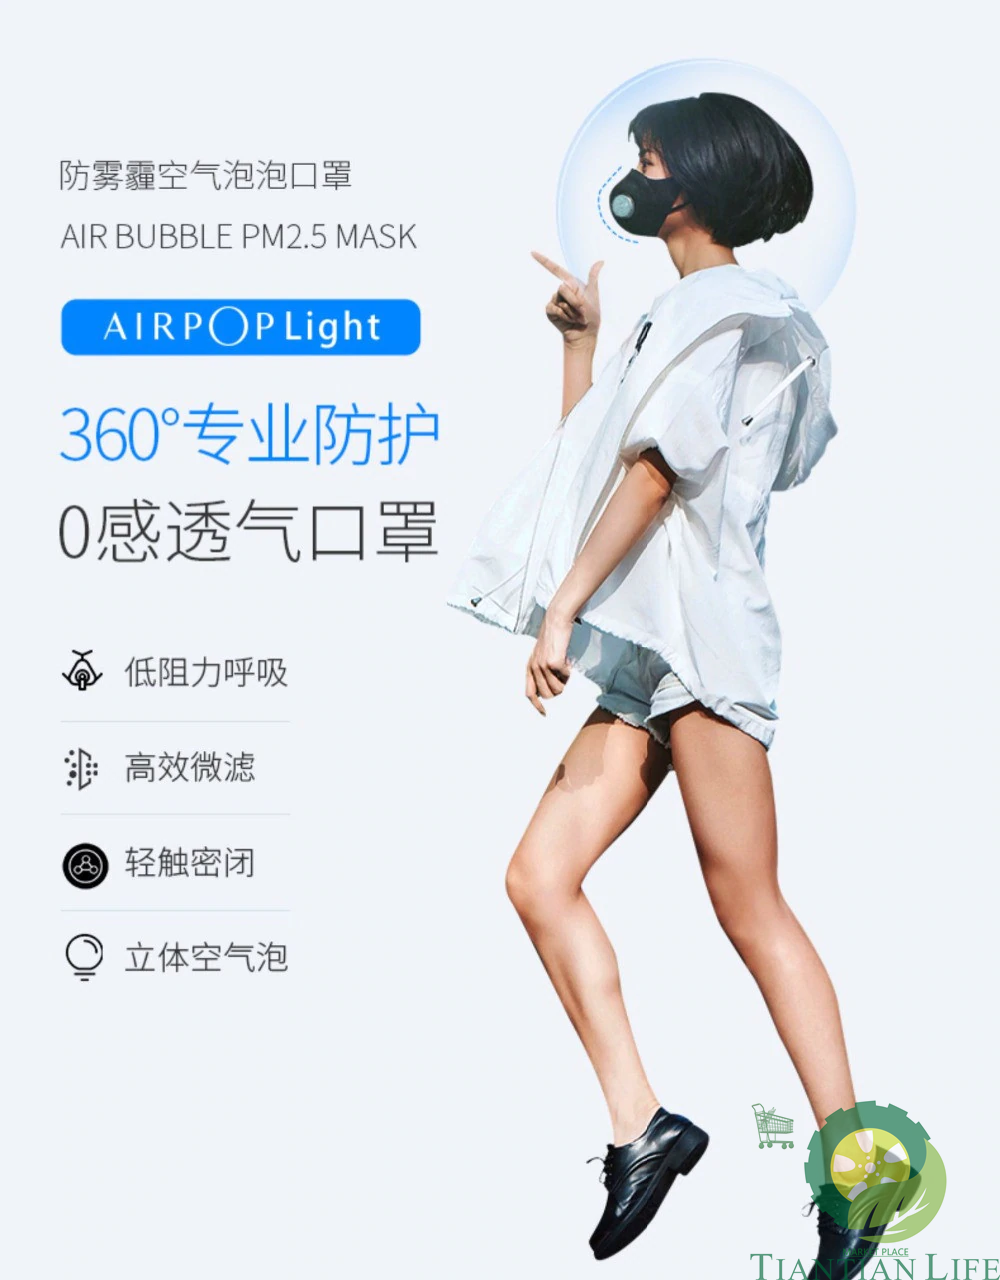 Airpop Light 360 Portable Wear PM2.5 Anti-haze Mask Adjustable ear hanging Comfortable